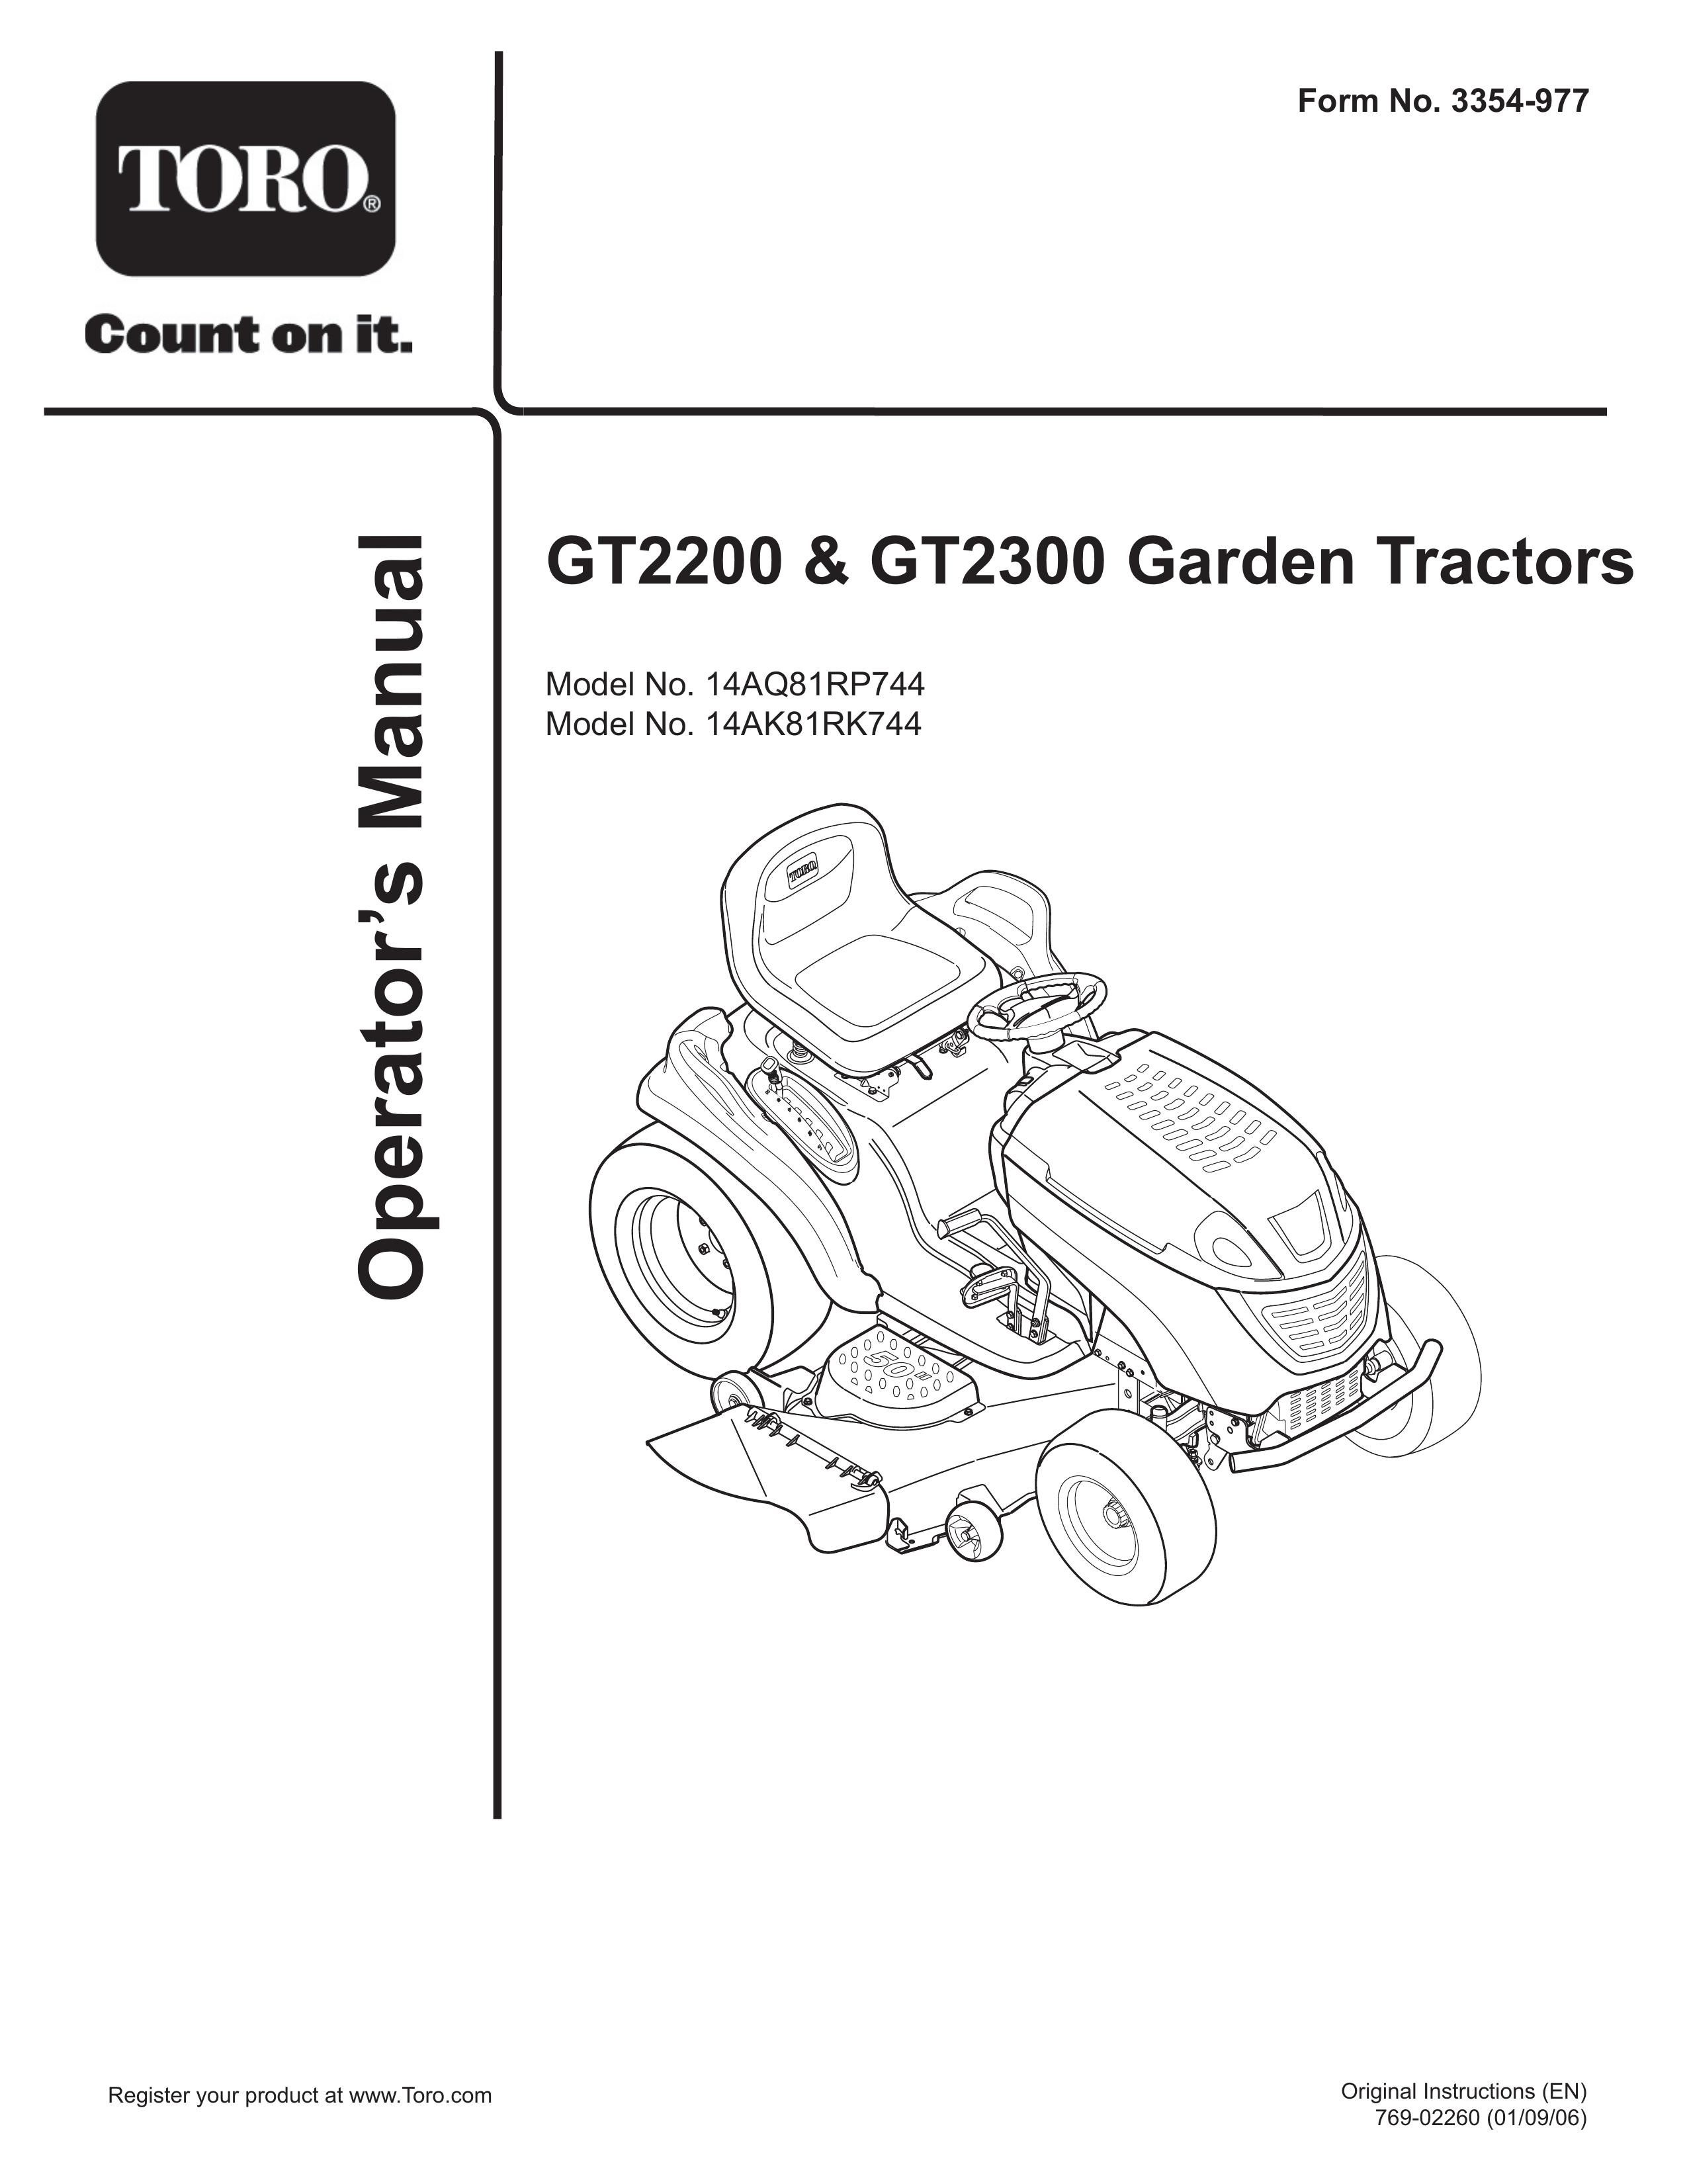 Toro 14AK81RK744 Lawn Mower User Manual